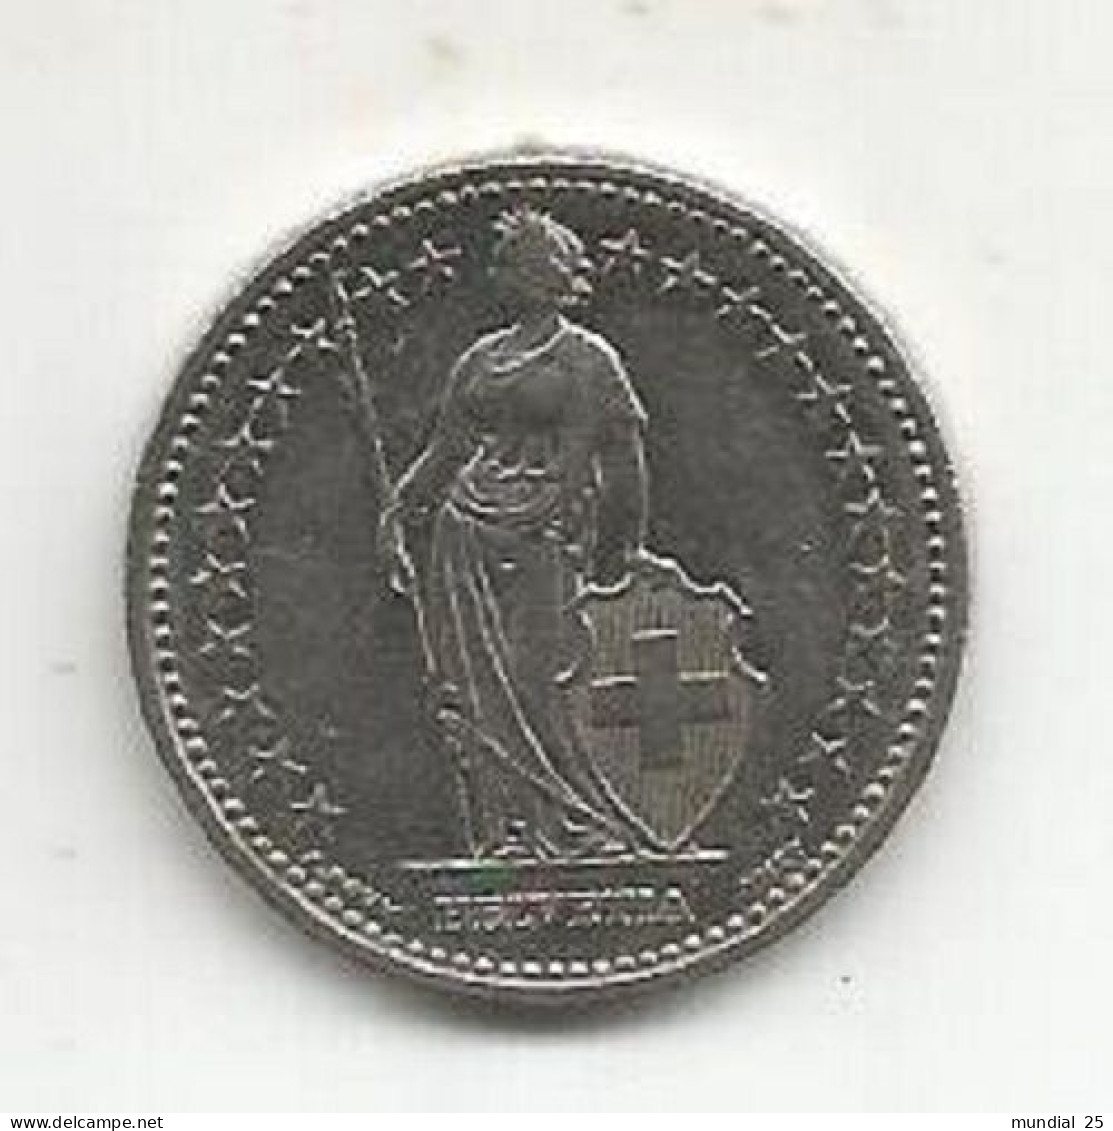 SWITZERLAND 1 FRANC 2008B - 1 Franc